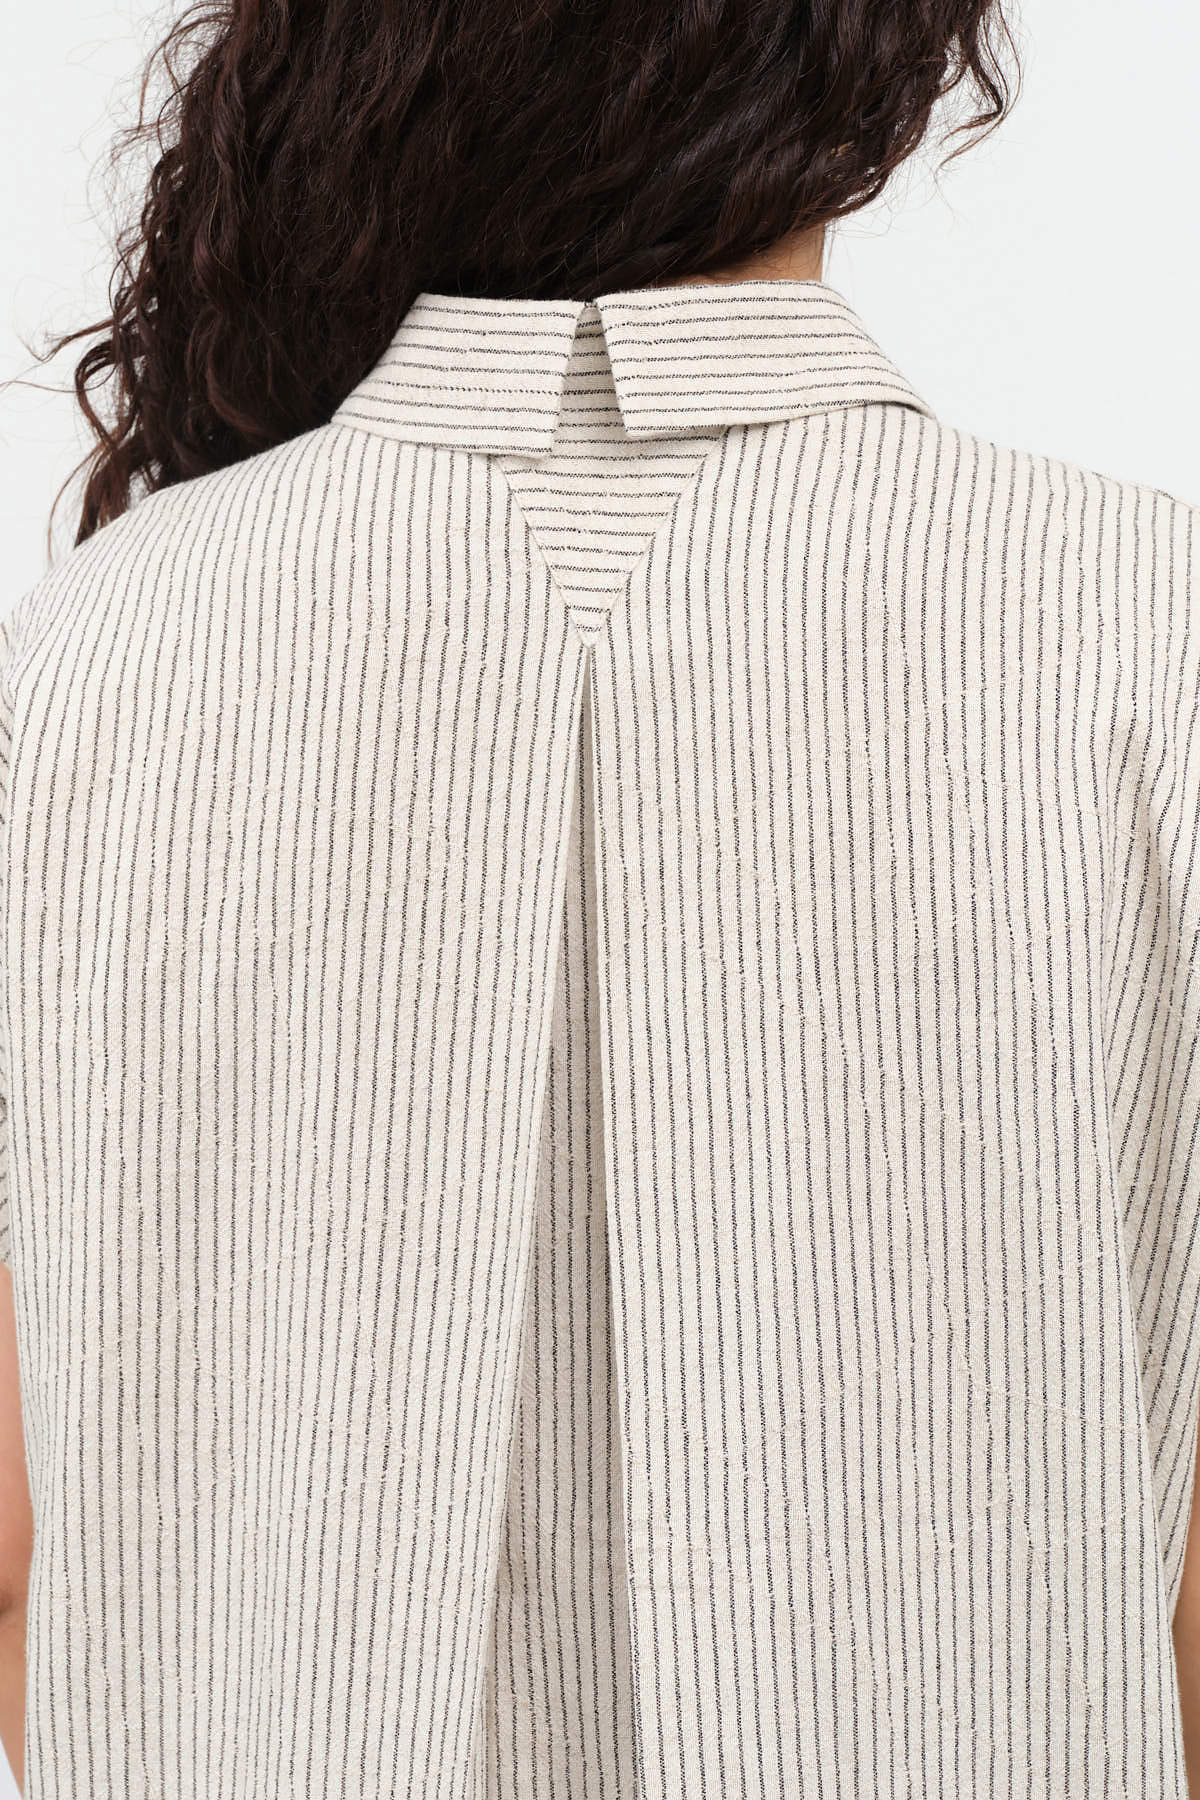 Rear collar view of Striped Shirt Maxi Dress